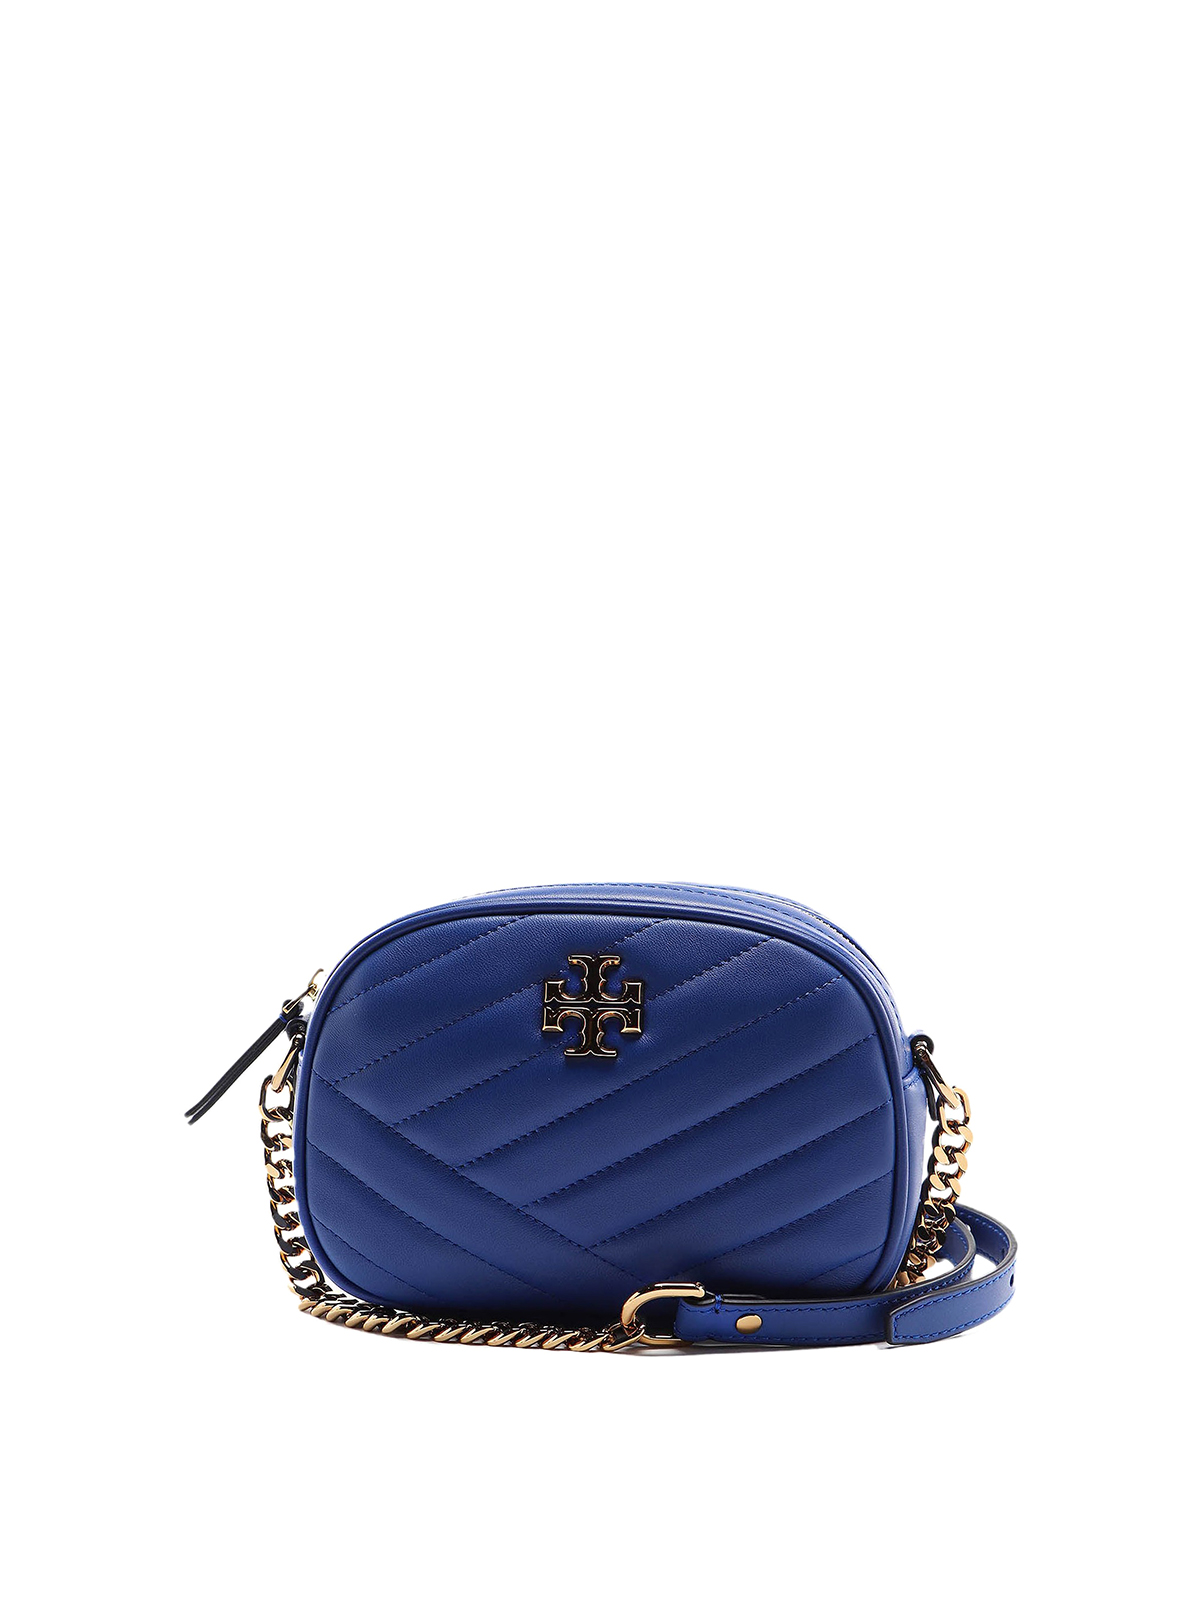 Small Kira Chevron Bag - Tory Burch - Blue - Leather